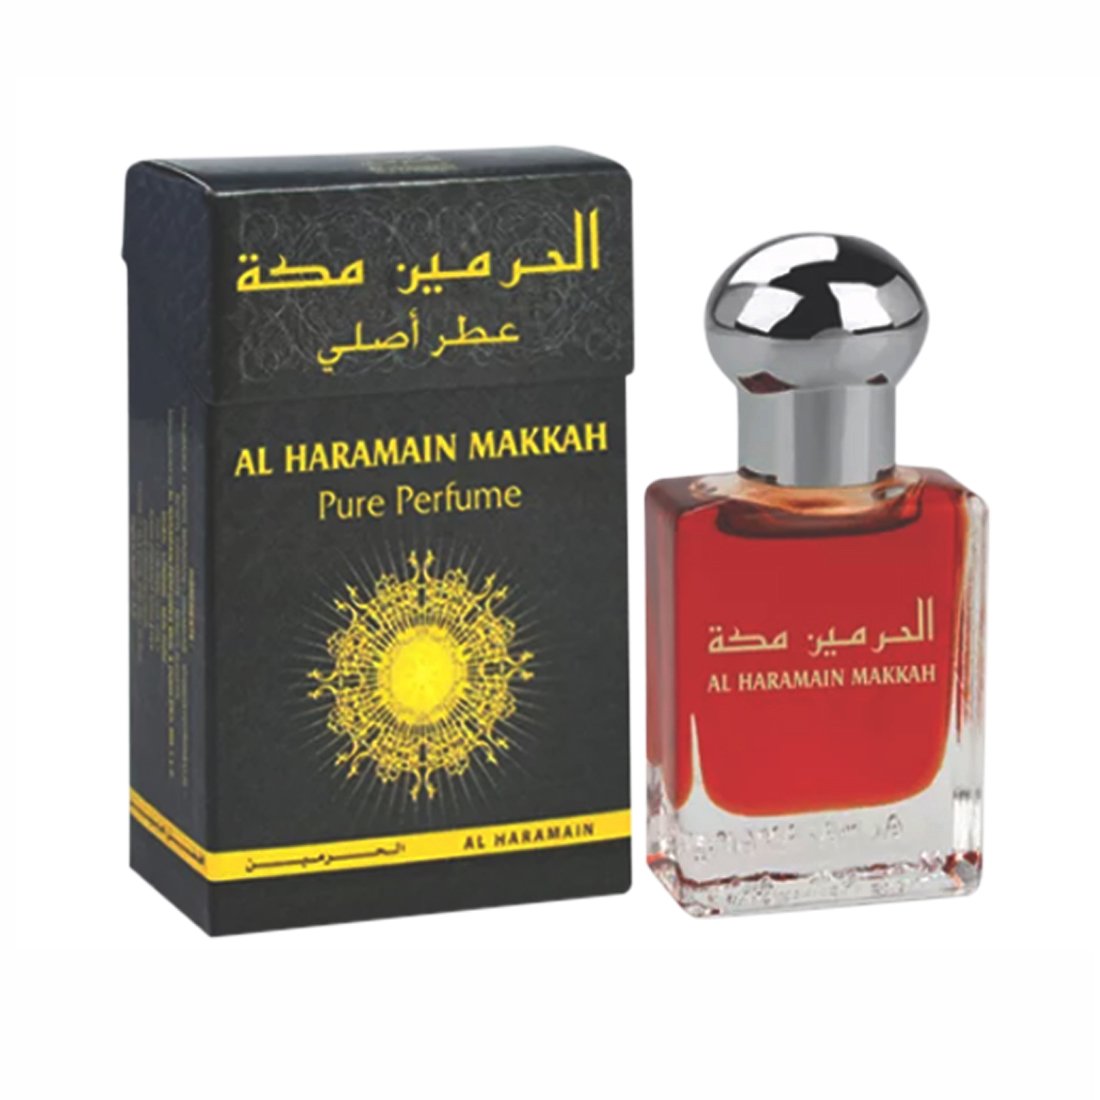 Al Haramain Makkah Fragrance Pure Original Roll on Perfume Oil (Attar) - 15 ml